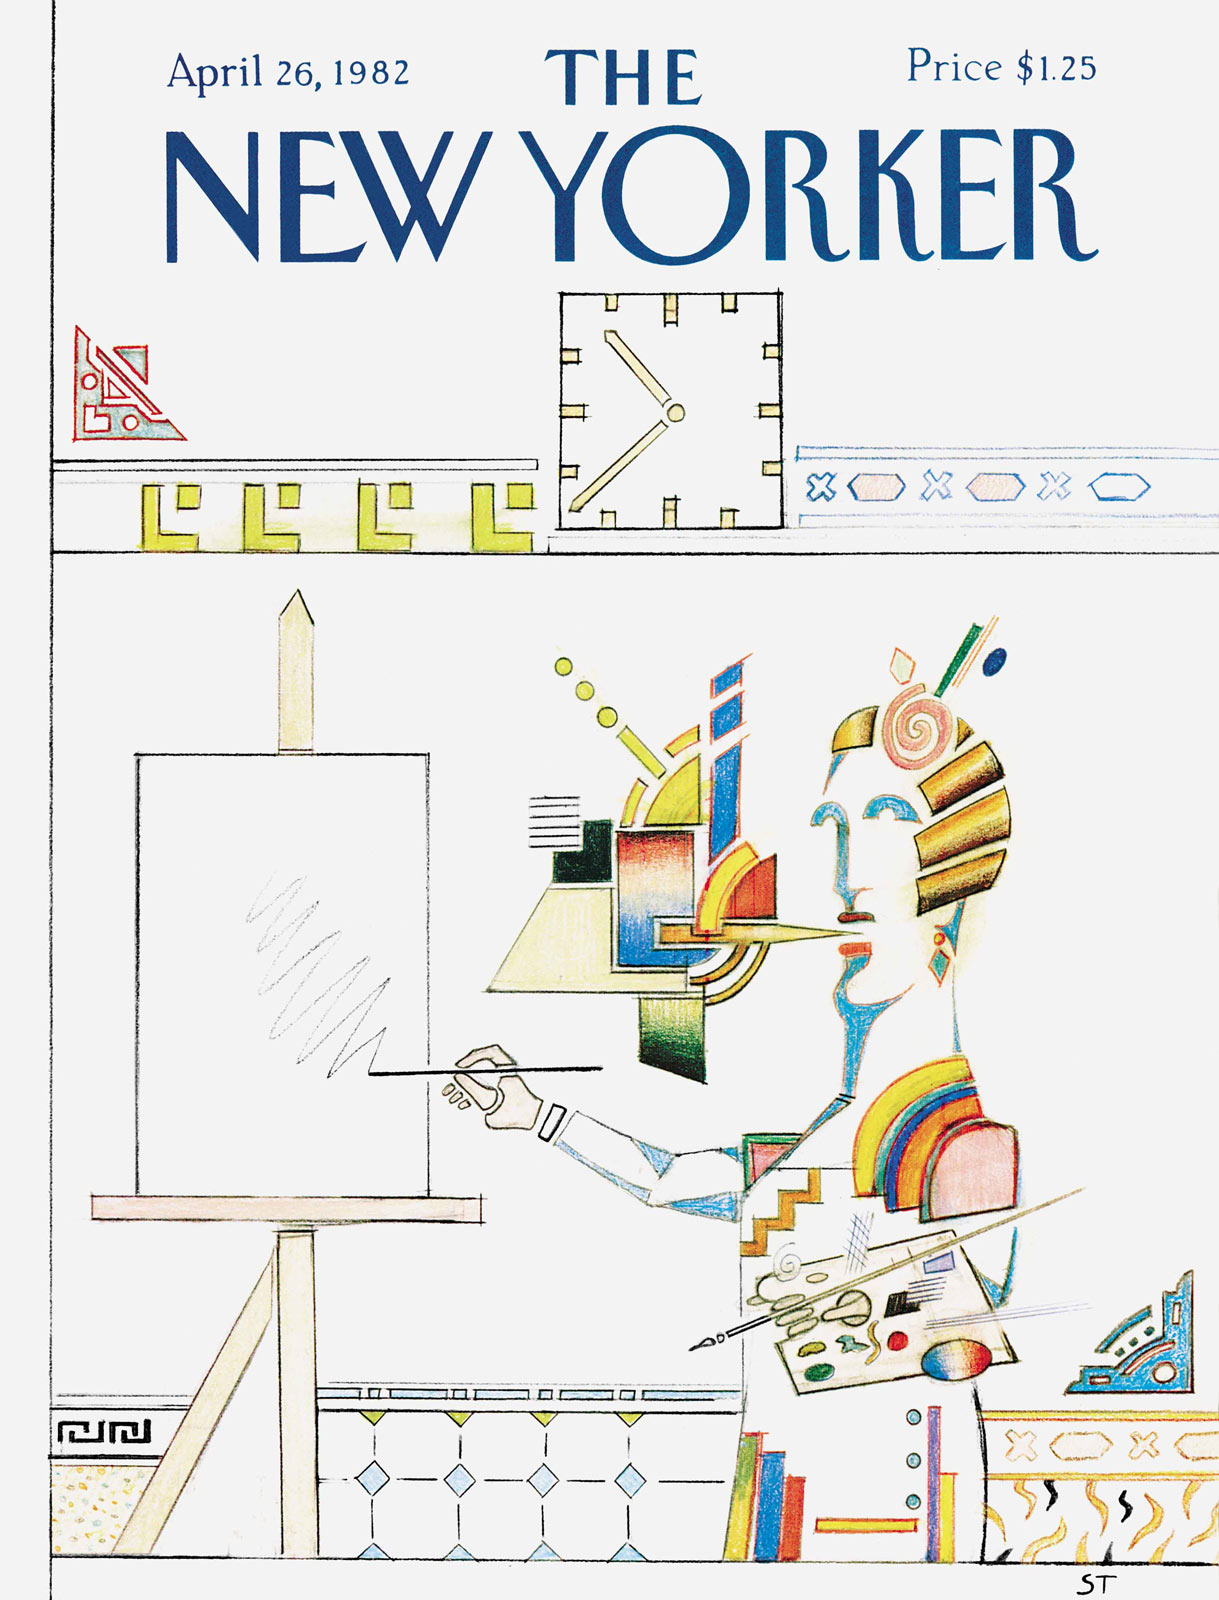 Cover of <em>The New Yorker</em>, April 26, 1982.